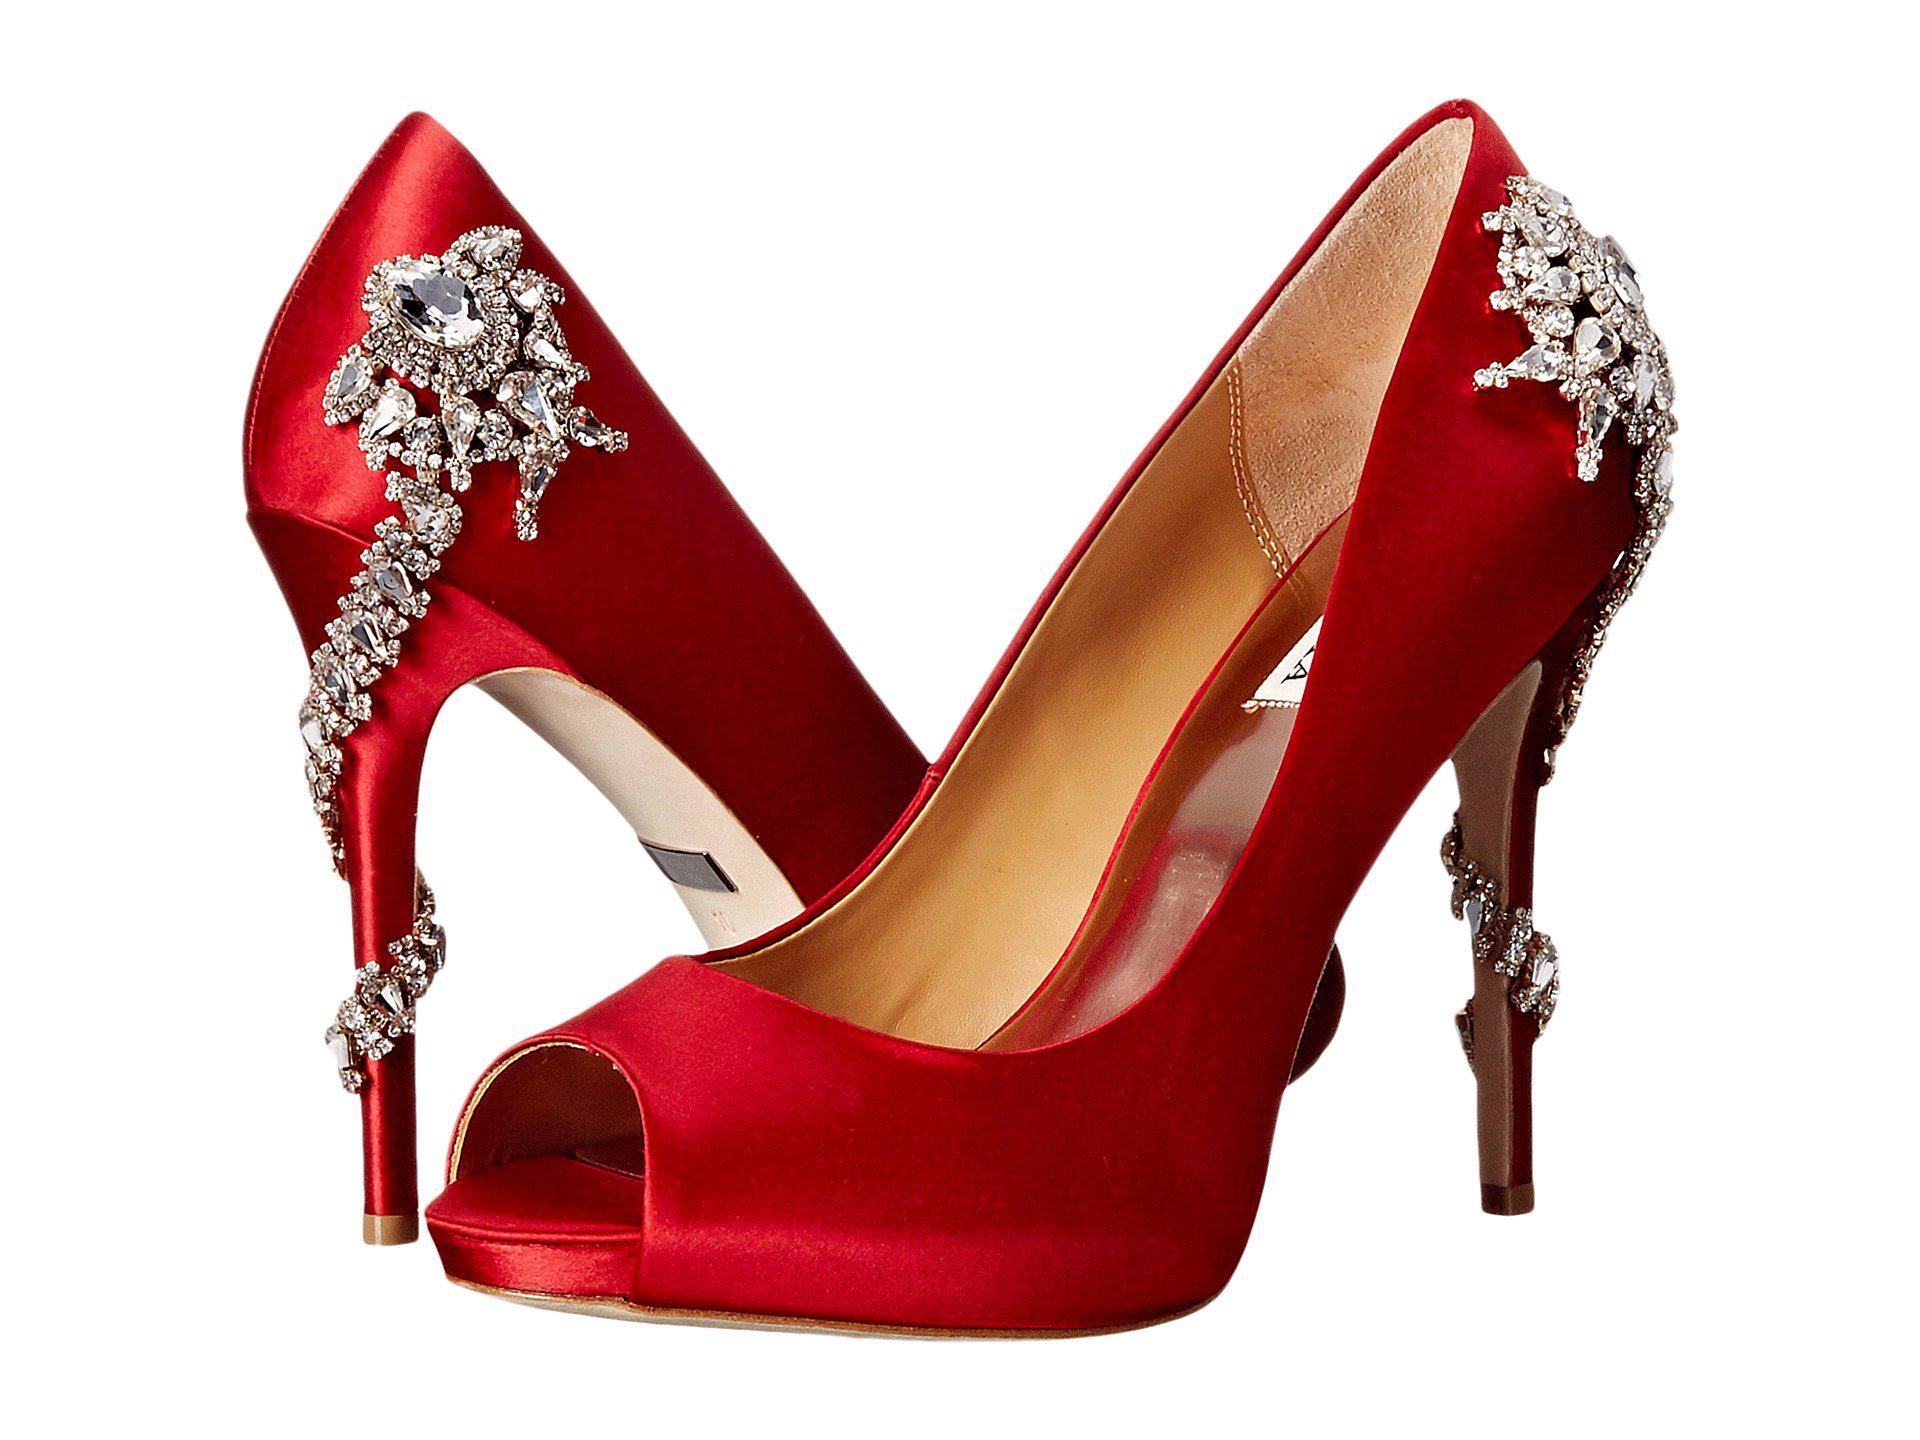 Lyst - Badgley Mischka Royal (red Satin) High Heels in Red